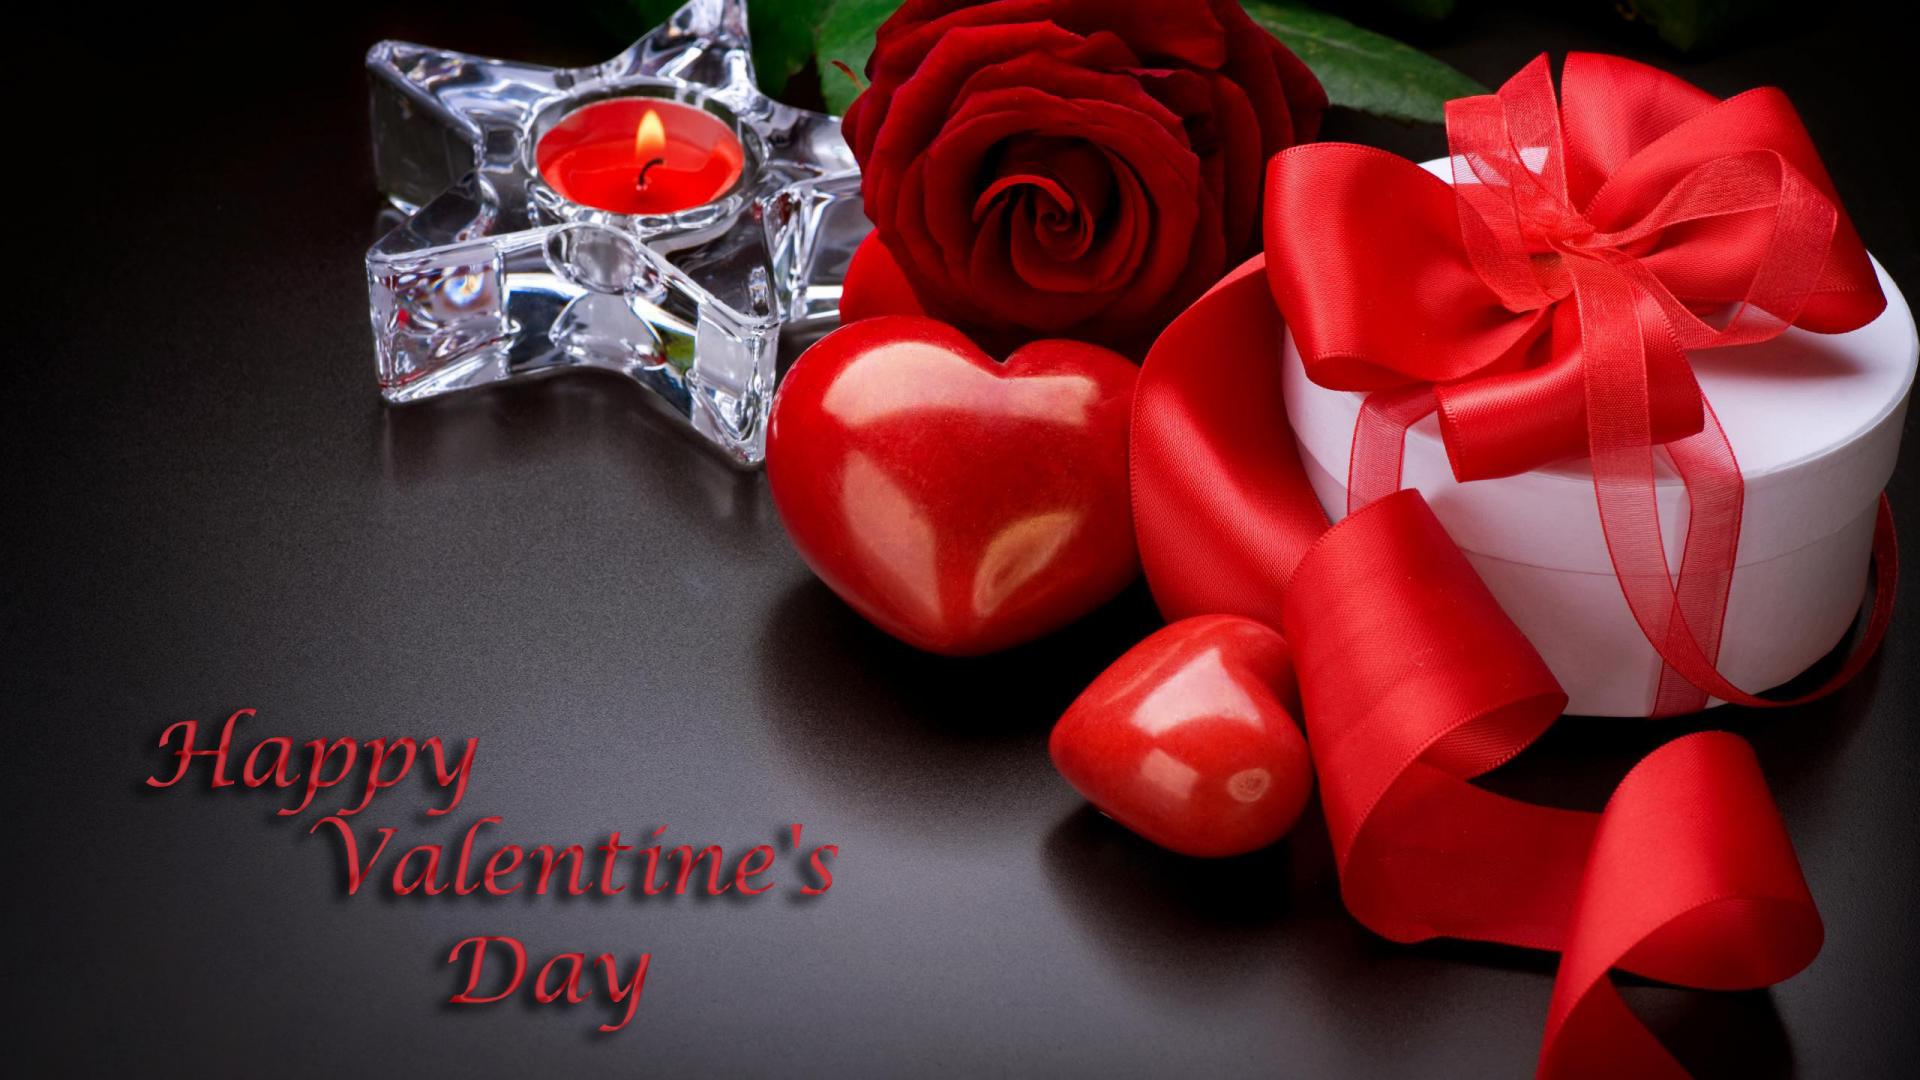 Happy Valentine Day HD Wallpaper of Love   hdwallpaper2013com